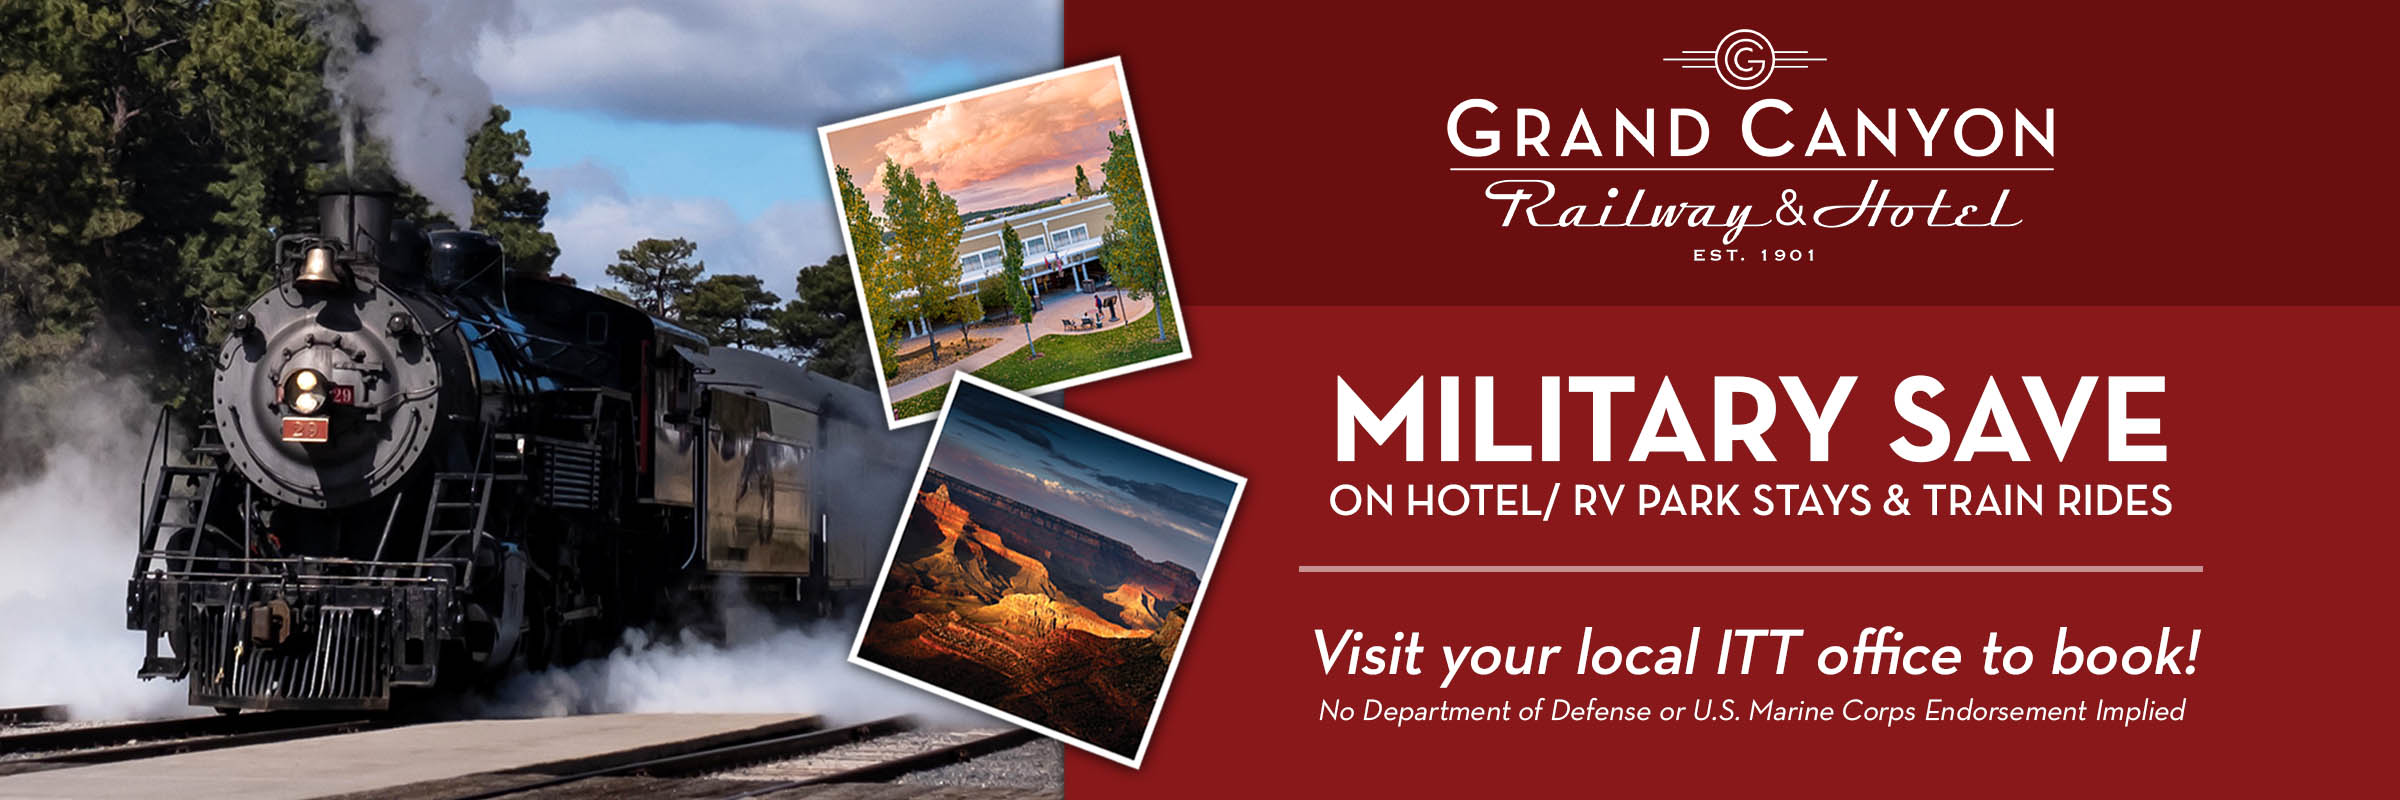 Grand Canyon Railway and Hotel ad fullsize web banner.jpg